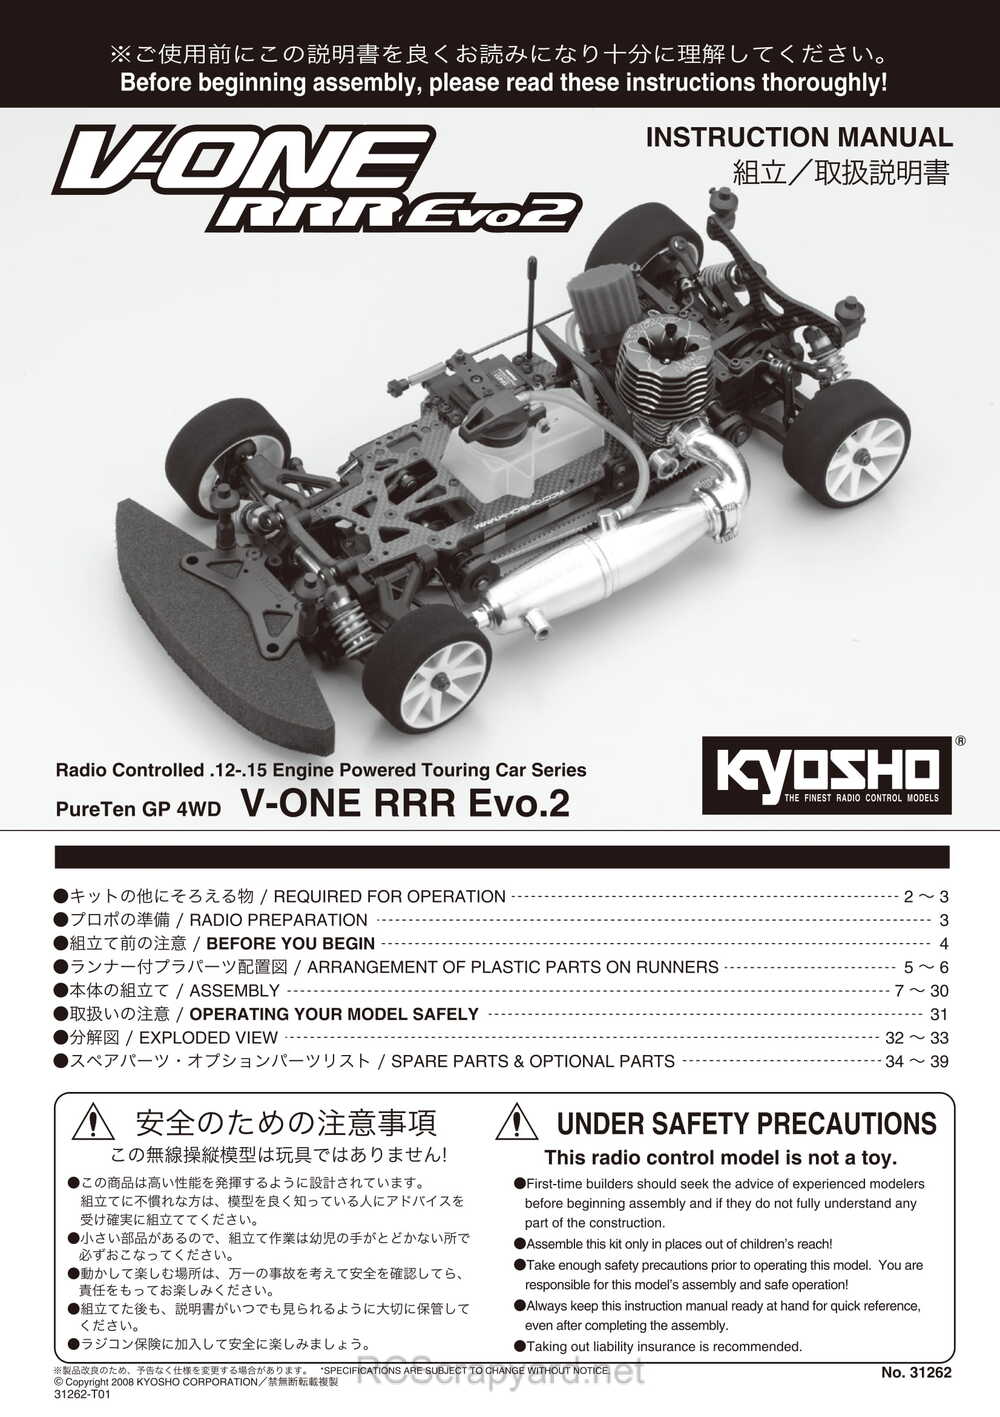 Kyosho - 31262 - V-One-RRR-Evo2 - Manual - Page 01